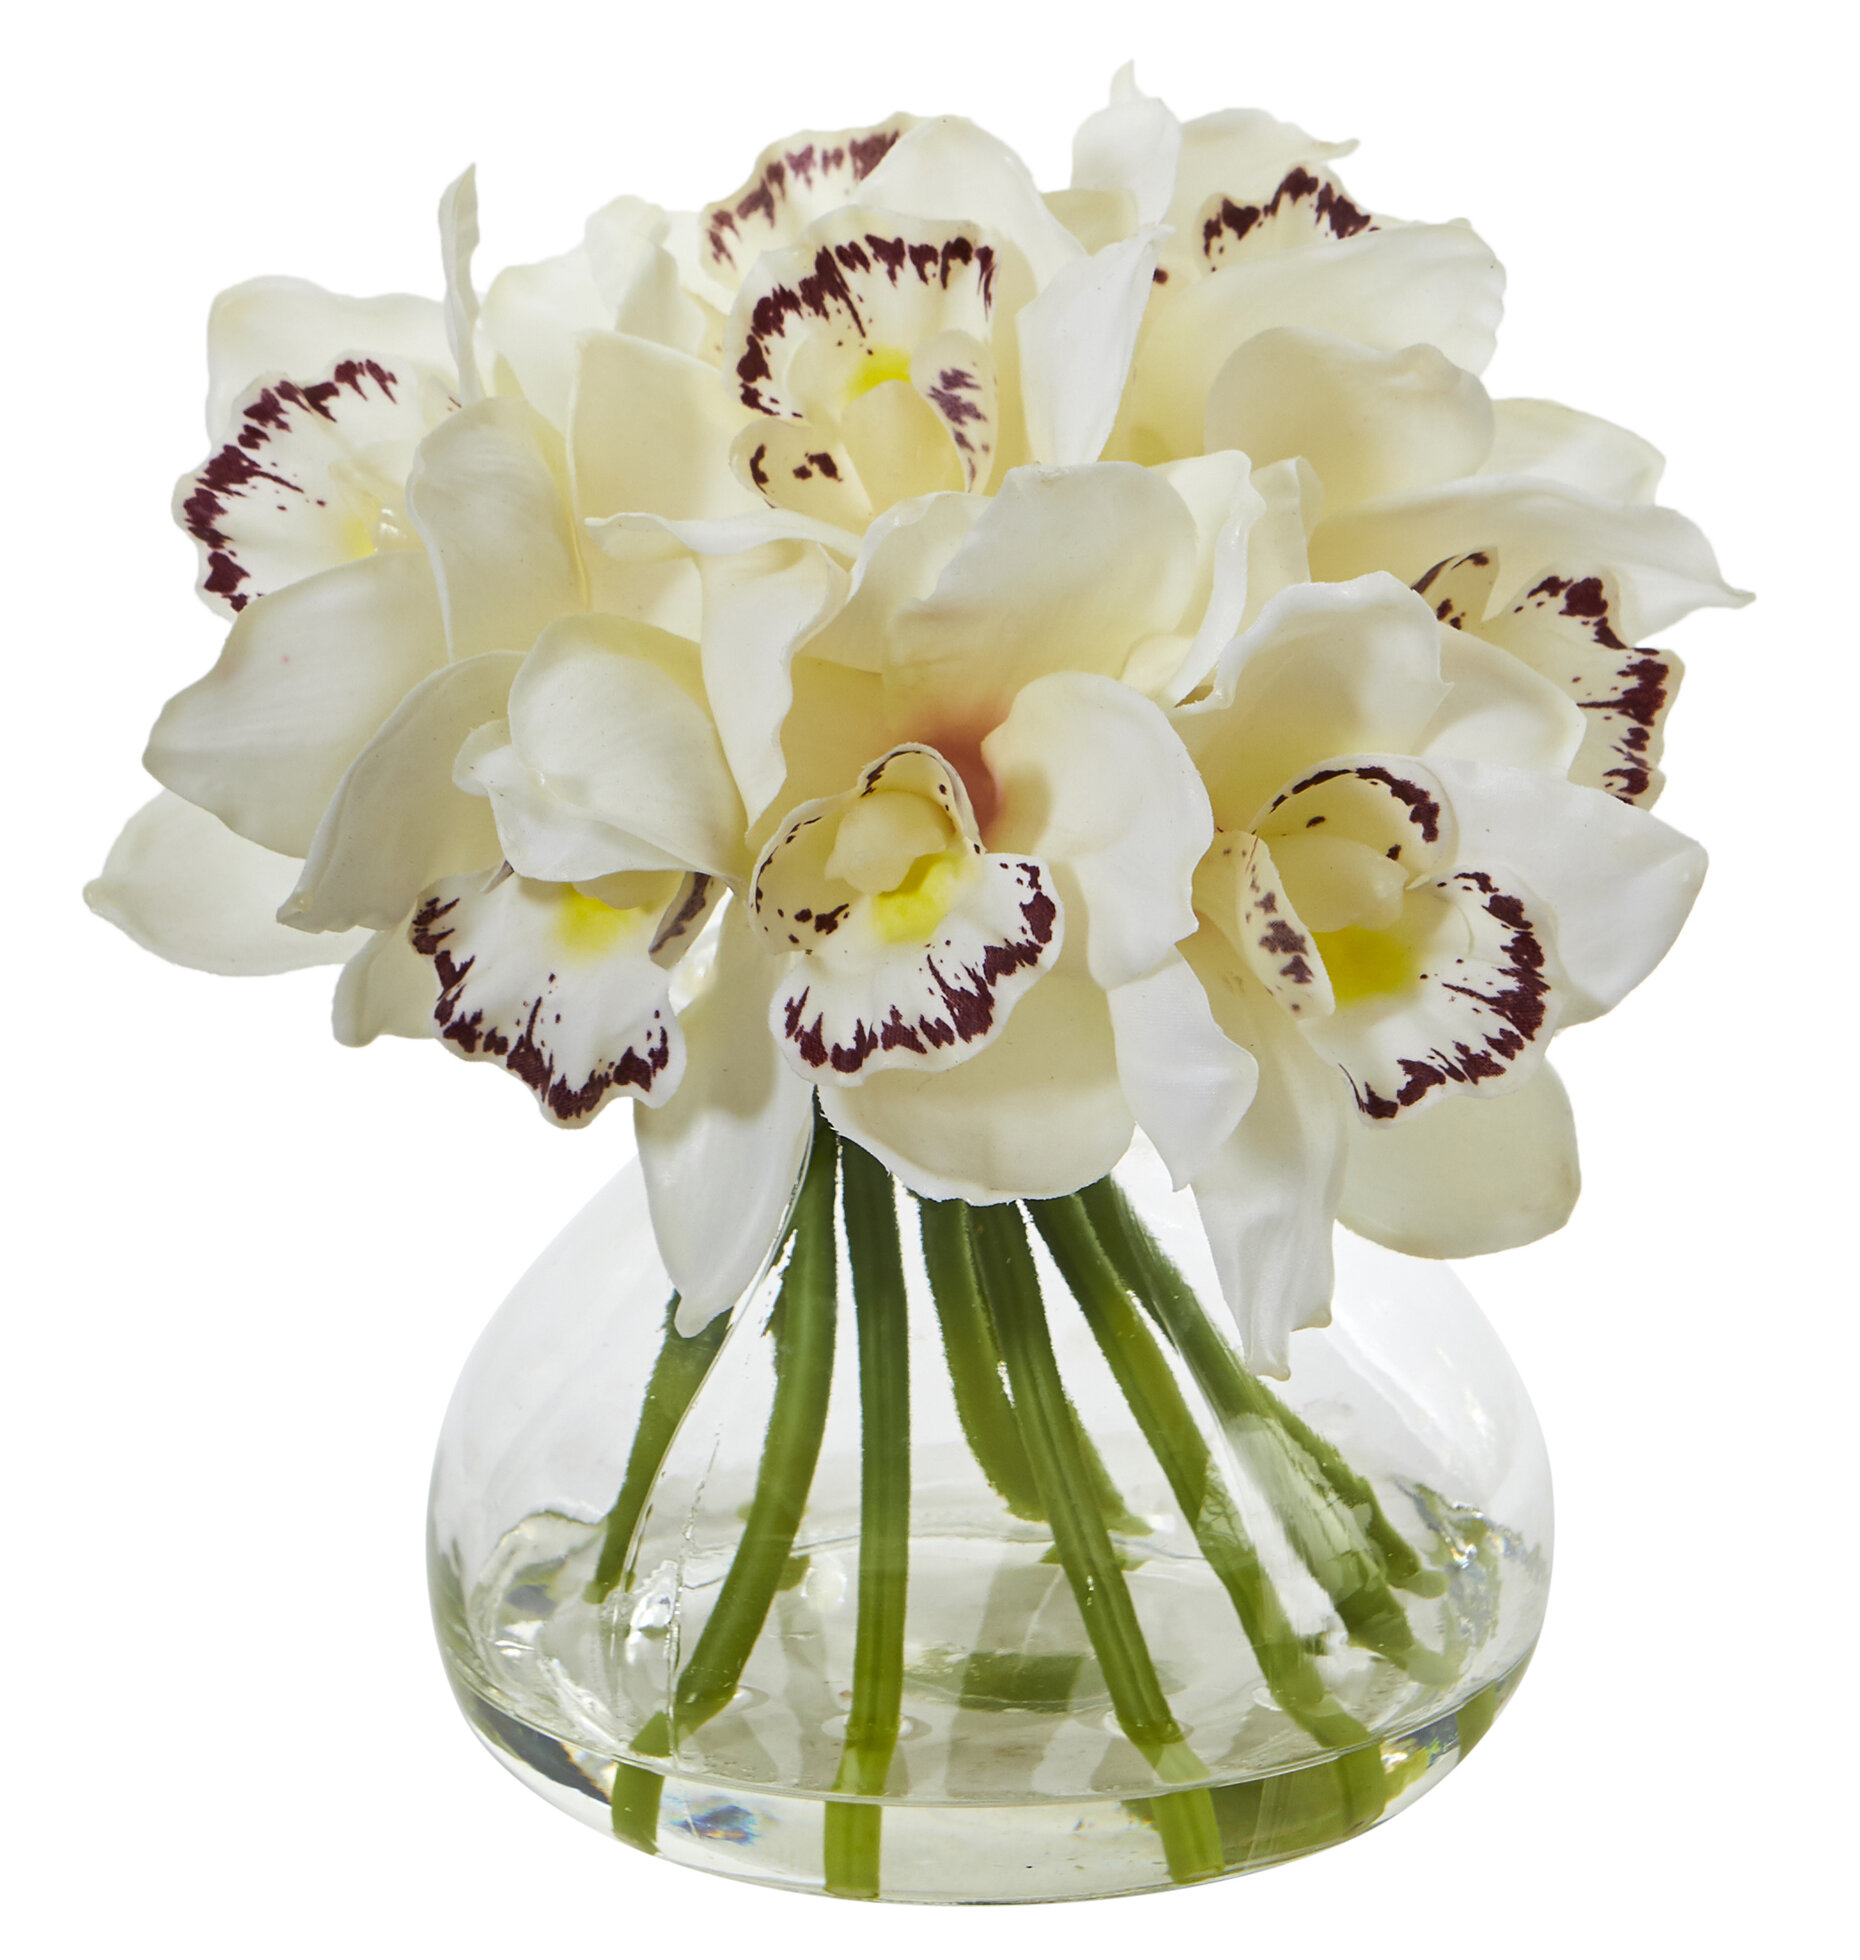 Bloomsbury Market Cymbidium Orchids Floral Arrangement In Vase Reviews Wayfair